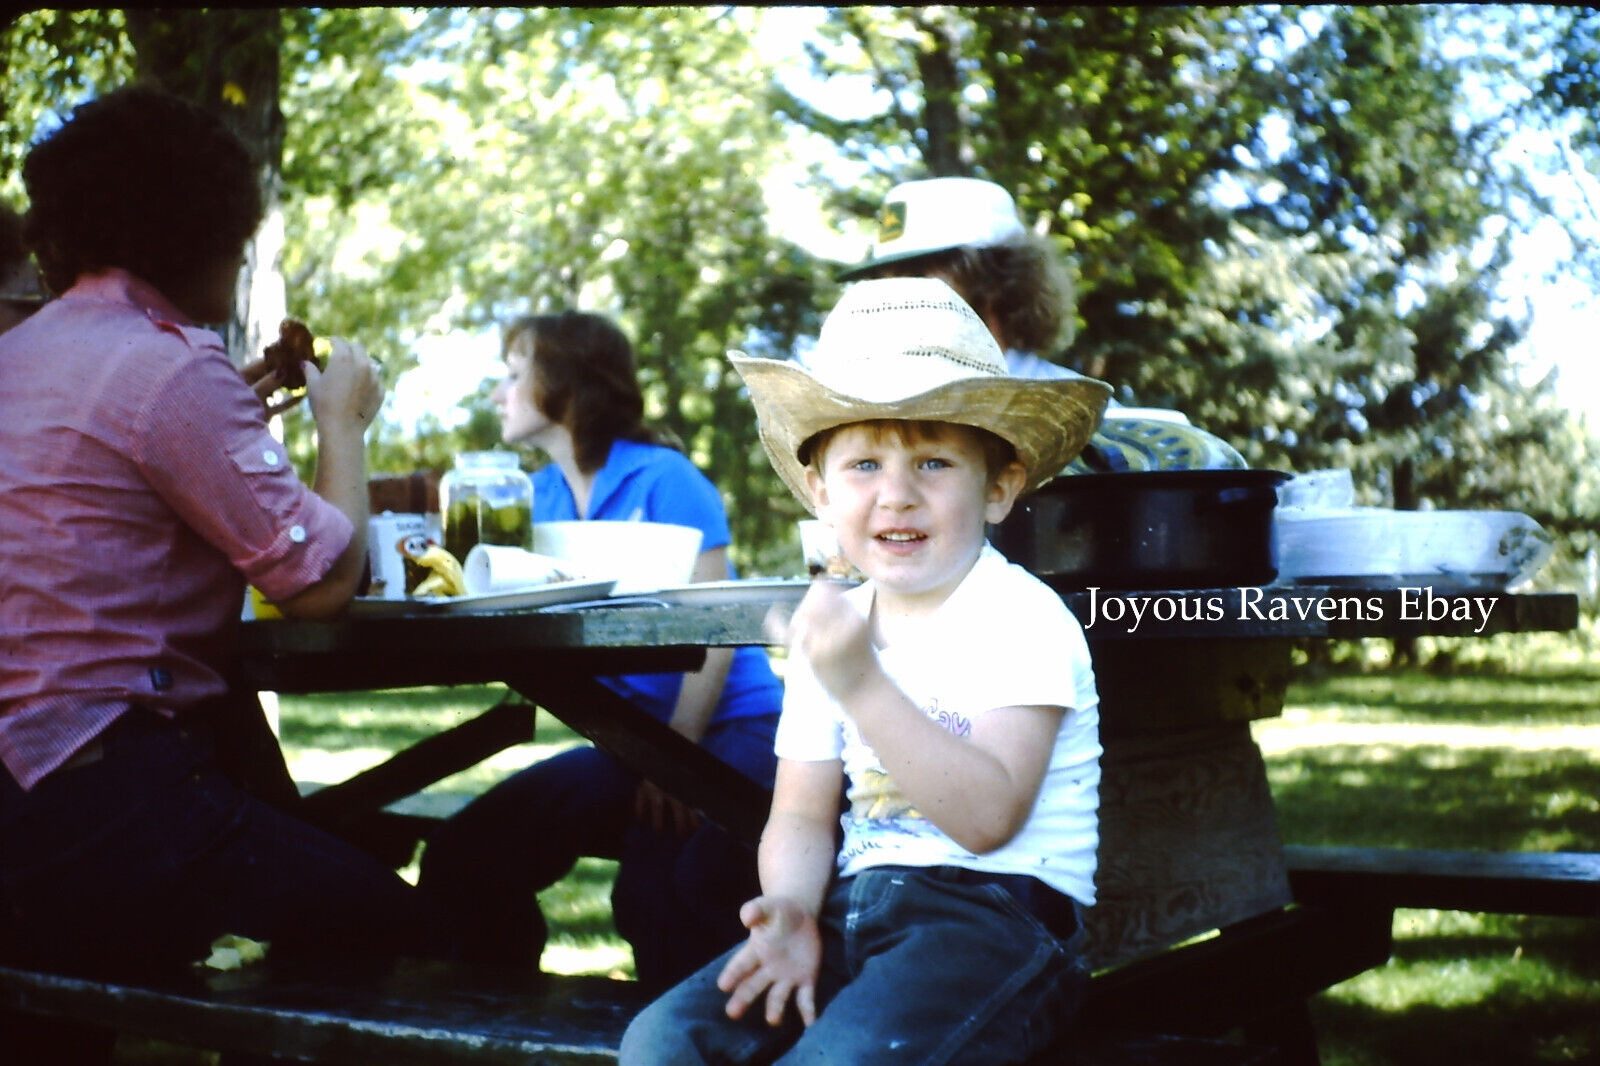 35MM Found Photo Slide 1979 Family Picnic Boy in Cowboy Hat A&W John Deere Hat